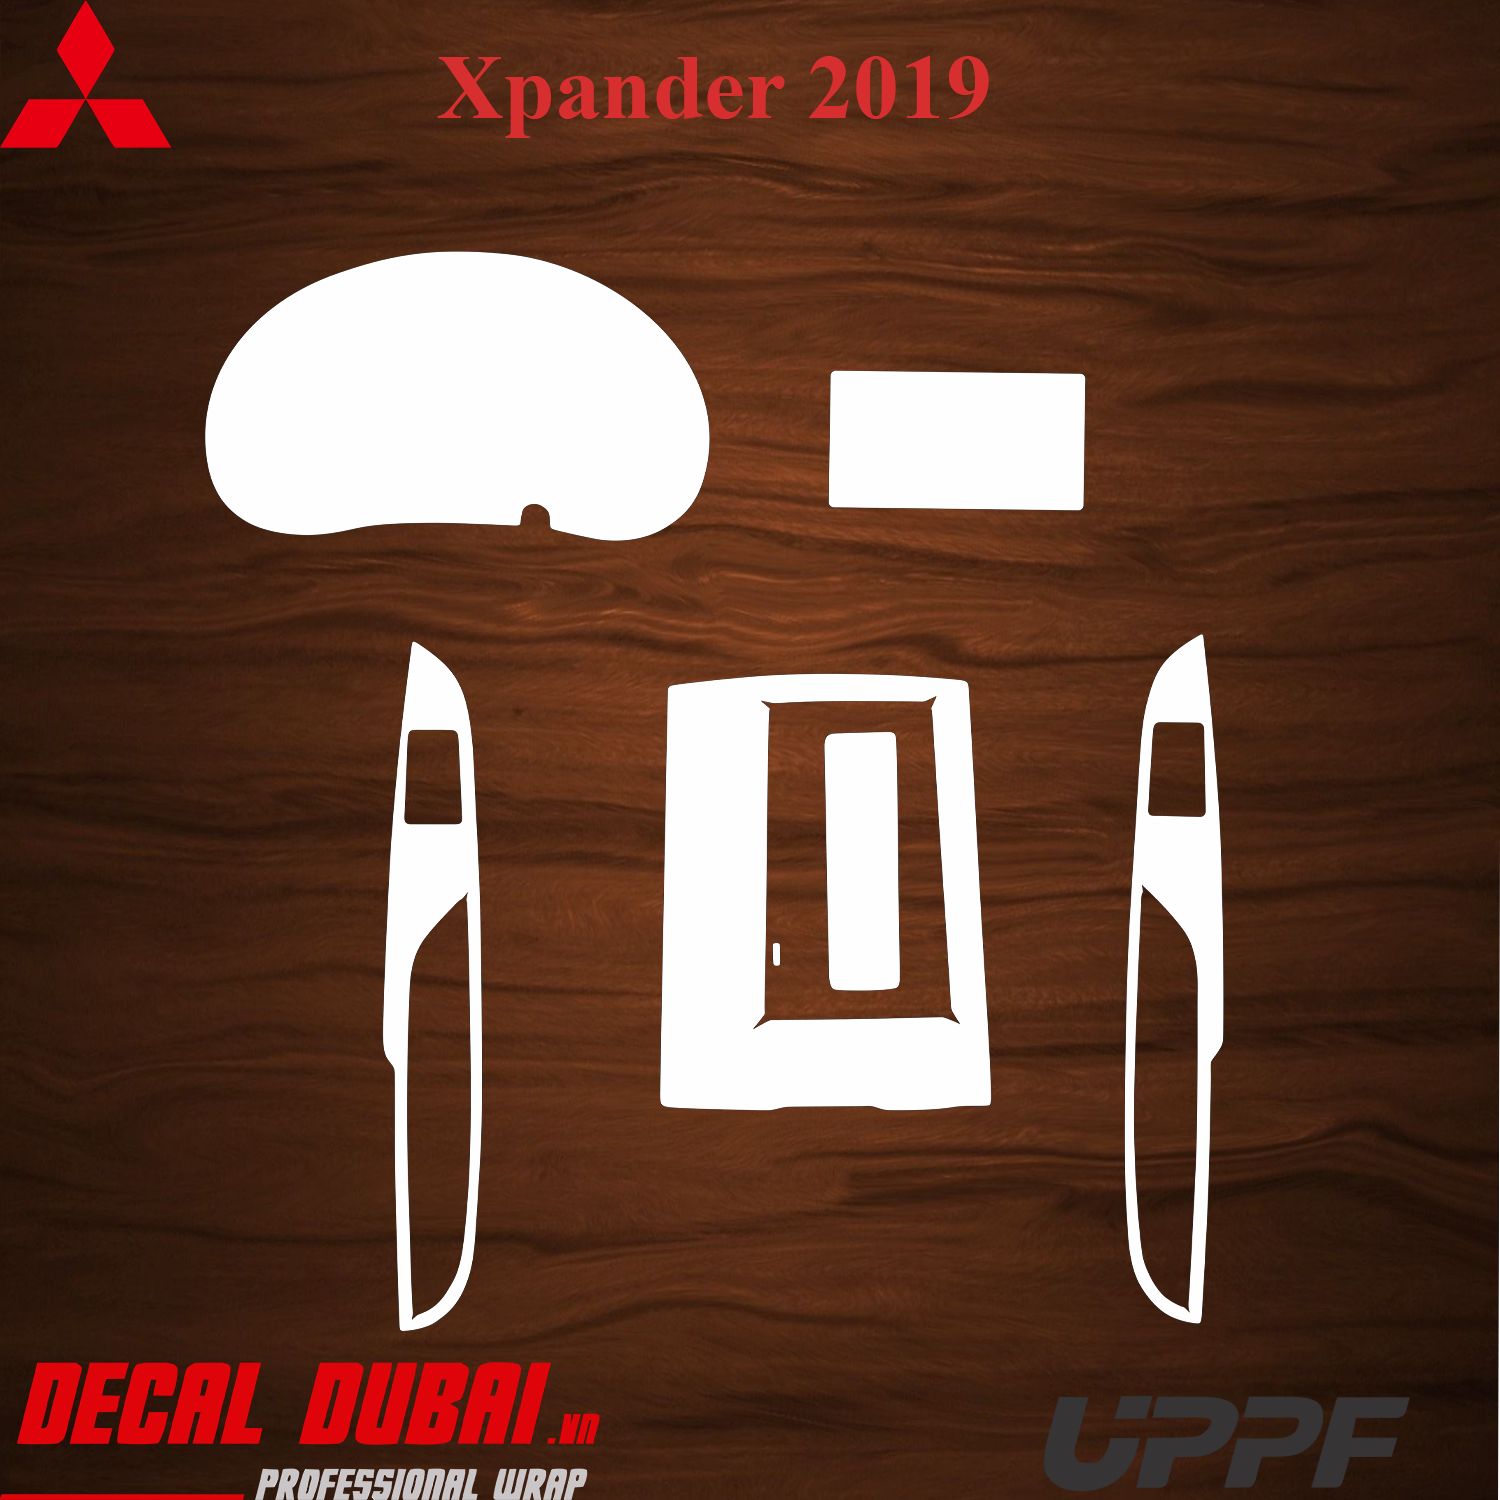 UPFF Bảo Vệ Nội Thất Xe Xpander 2019 - Decaldubai